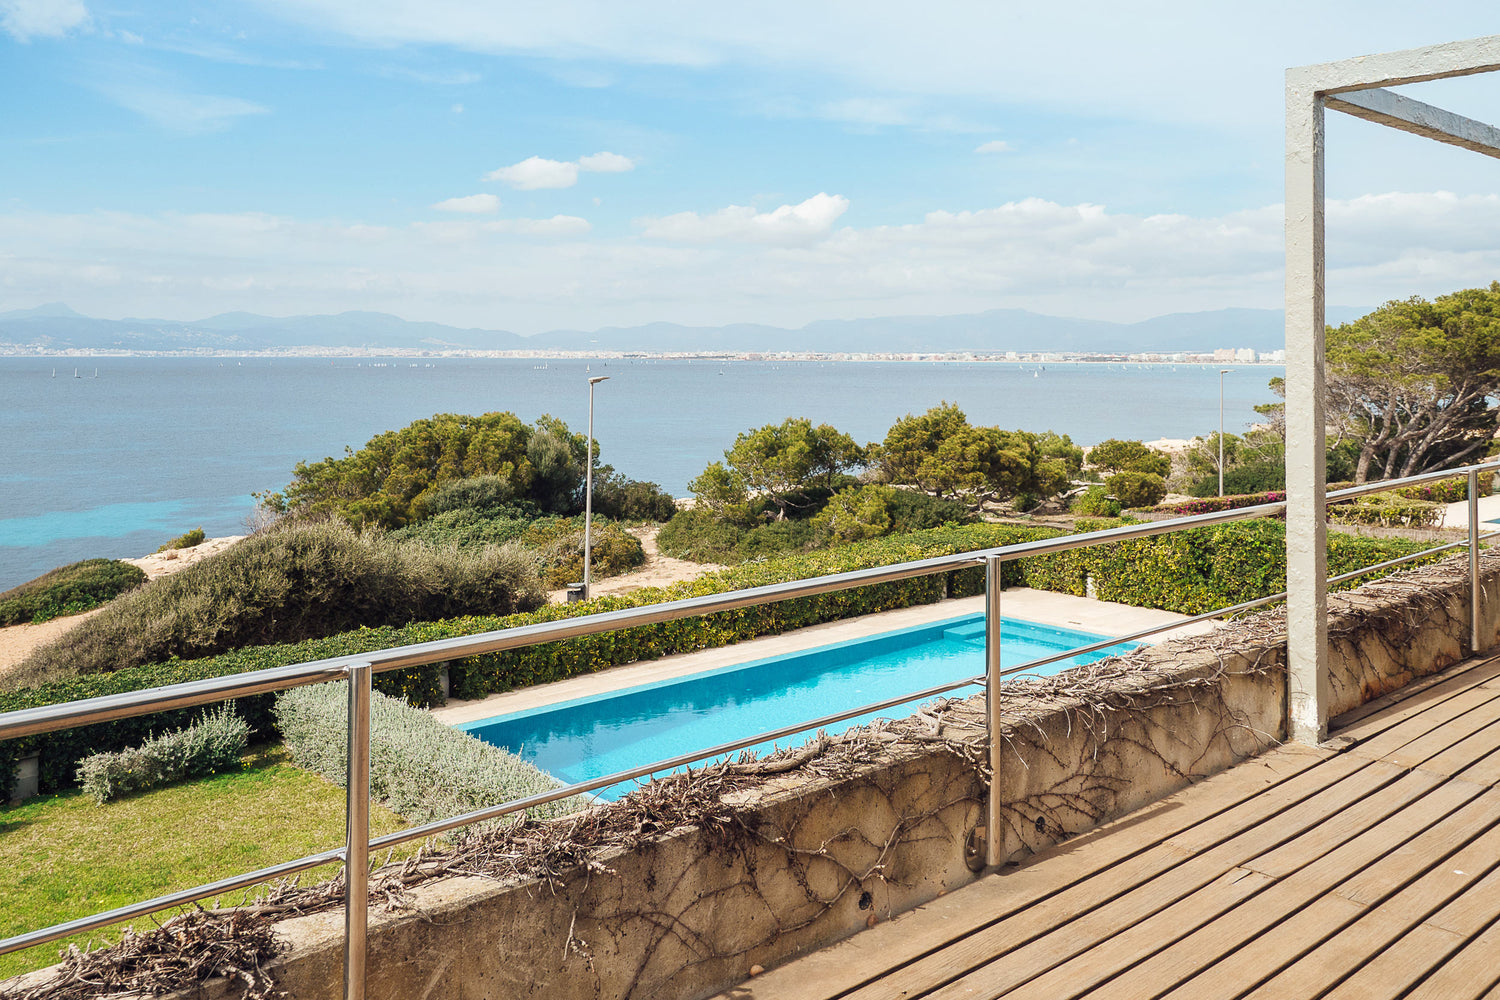 Magnificent modern design villa, Bay of Palma